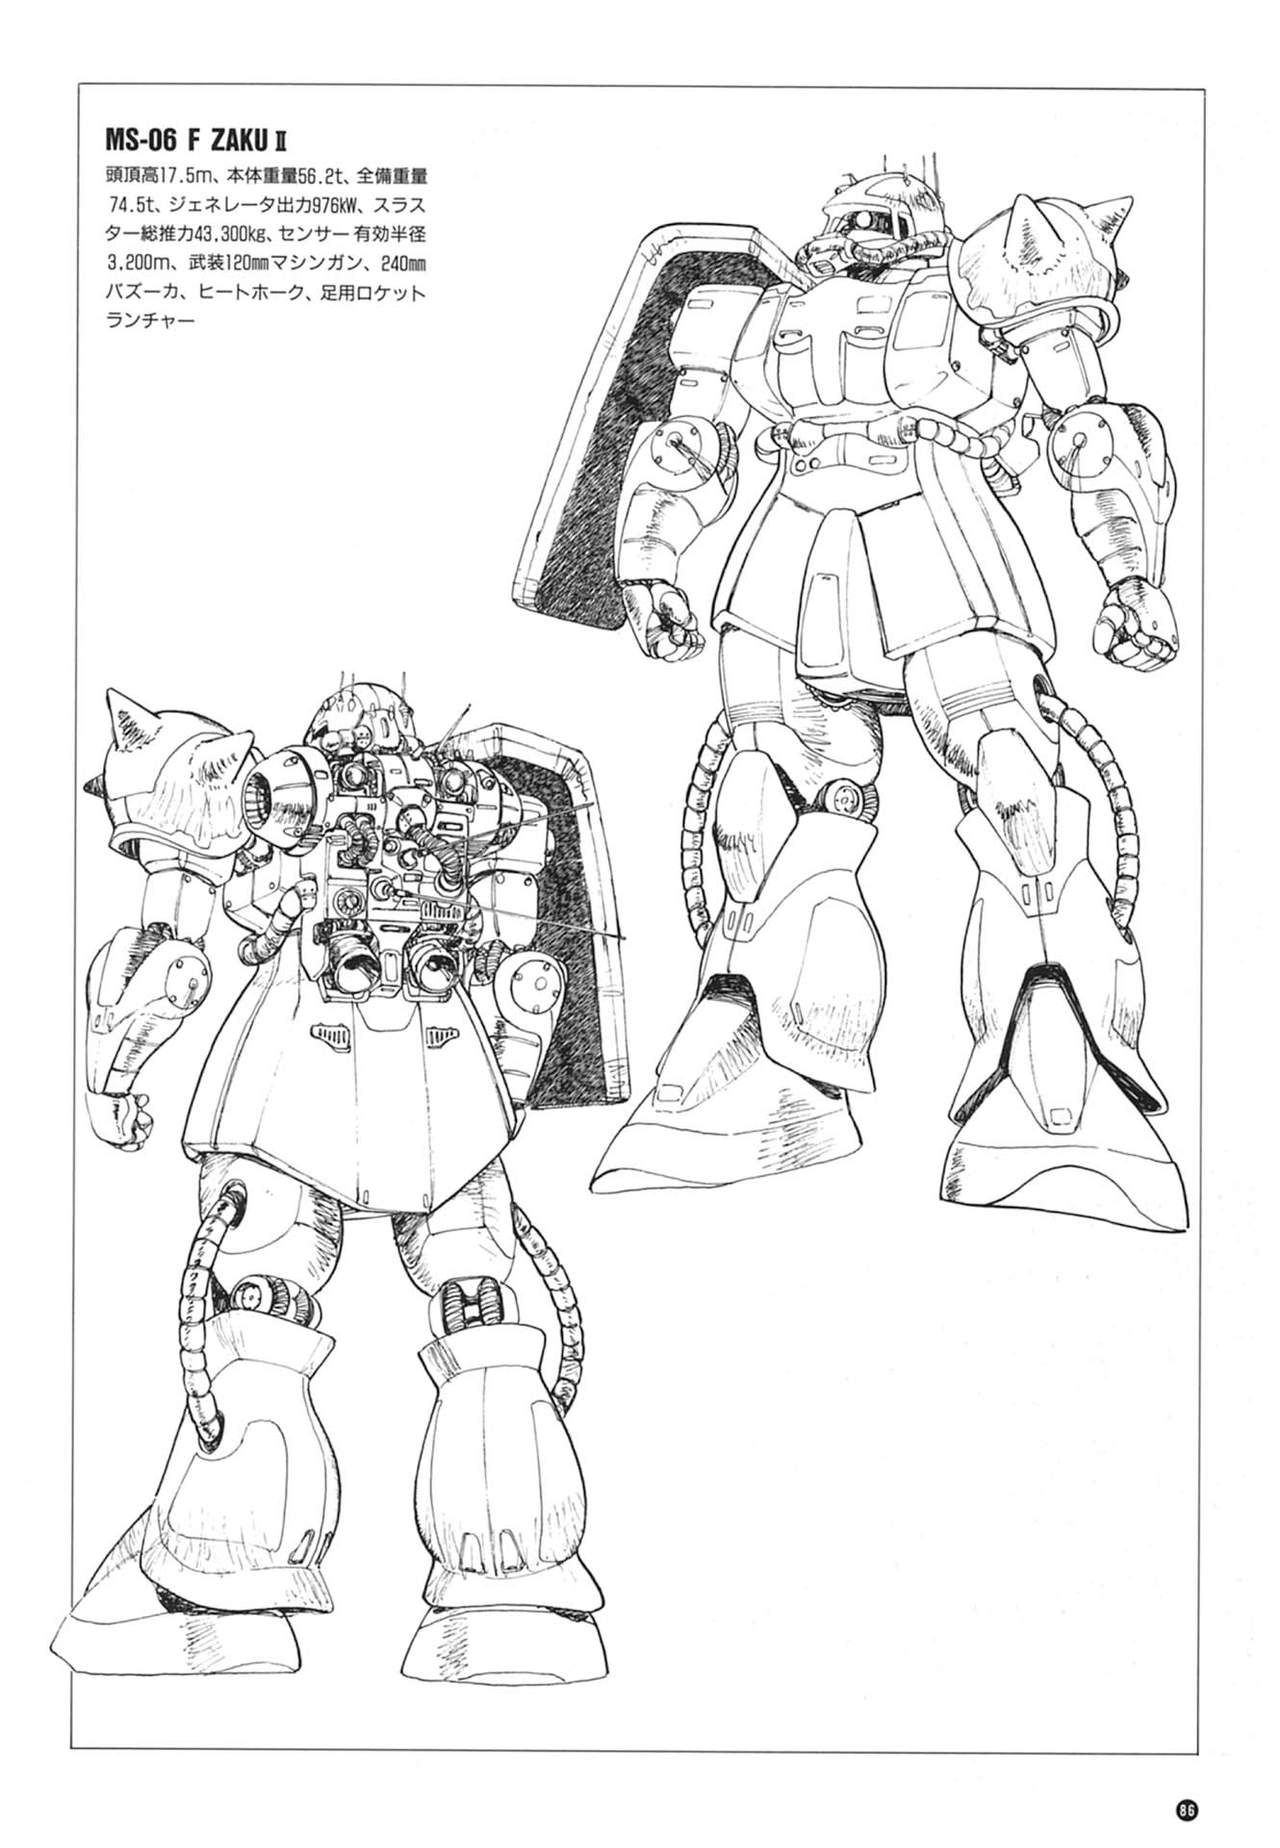 [Kazuhisa Kondo] Kazuhisa Kondo 2D & 3D Works - Go Ahead - From Mobile Suit Gundam to Original Mechanism 85